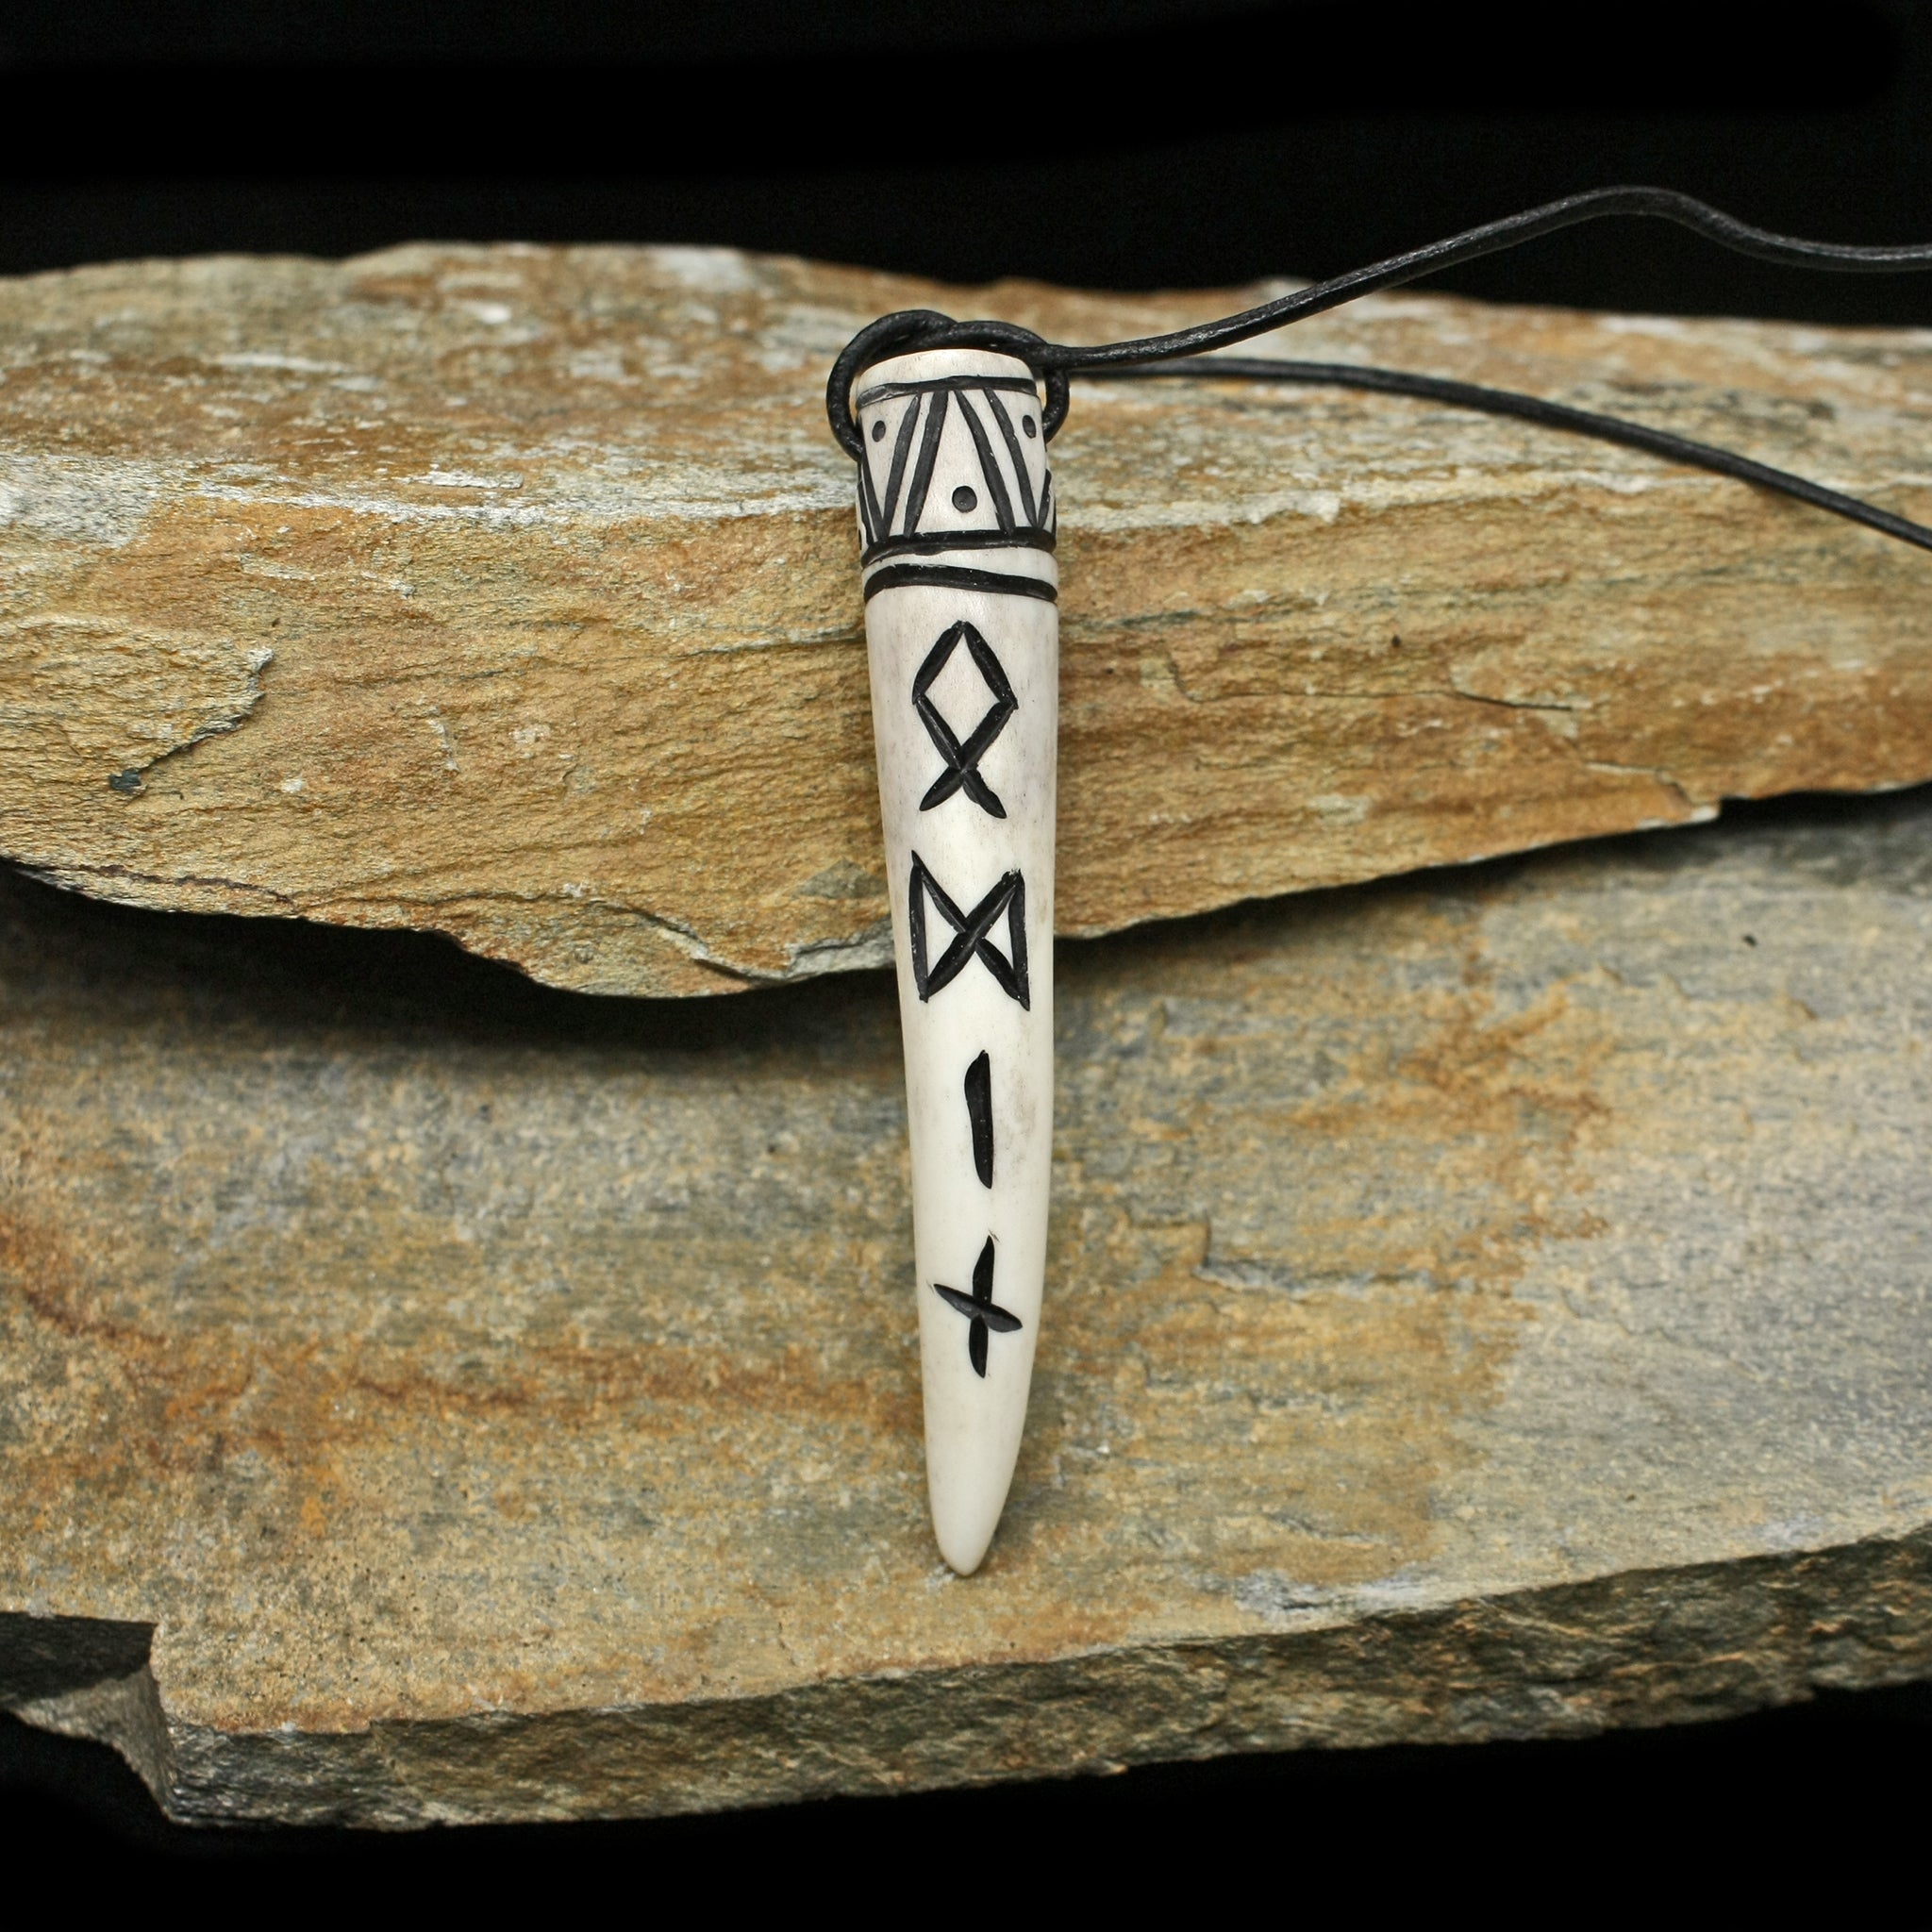 Unique Walnut Wood Odin's Horns and Runes Pendant